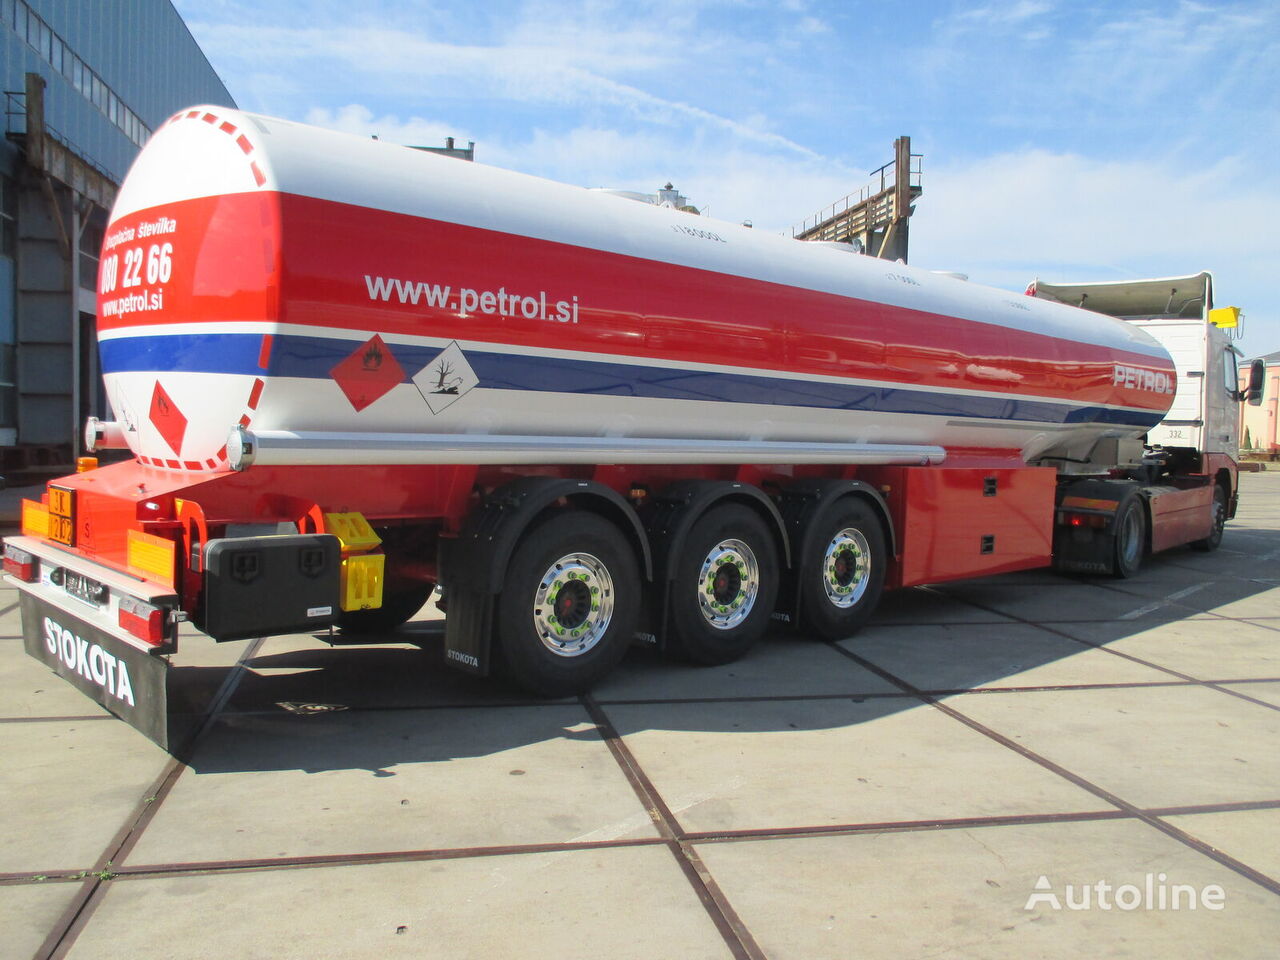 new Stokota fuel tank semi-trailer